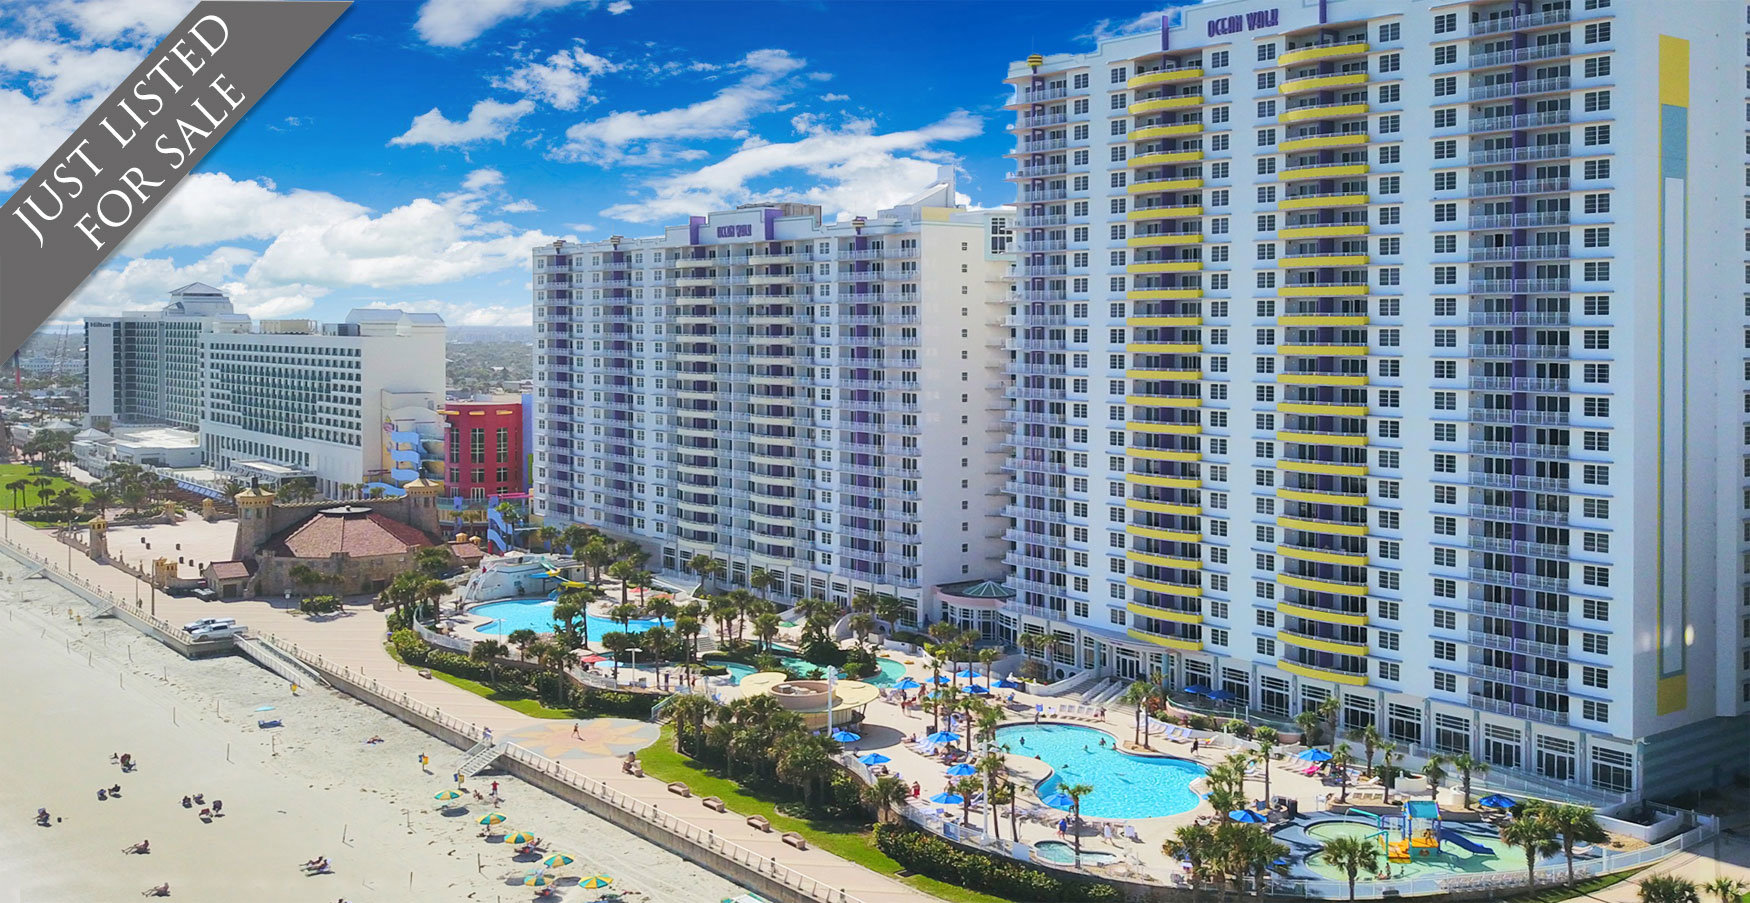 Ocean Walk oceanfront condos for sale in Daytona Beach, FL.